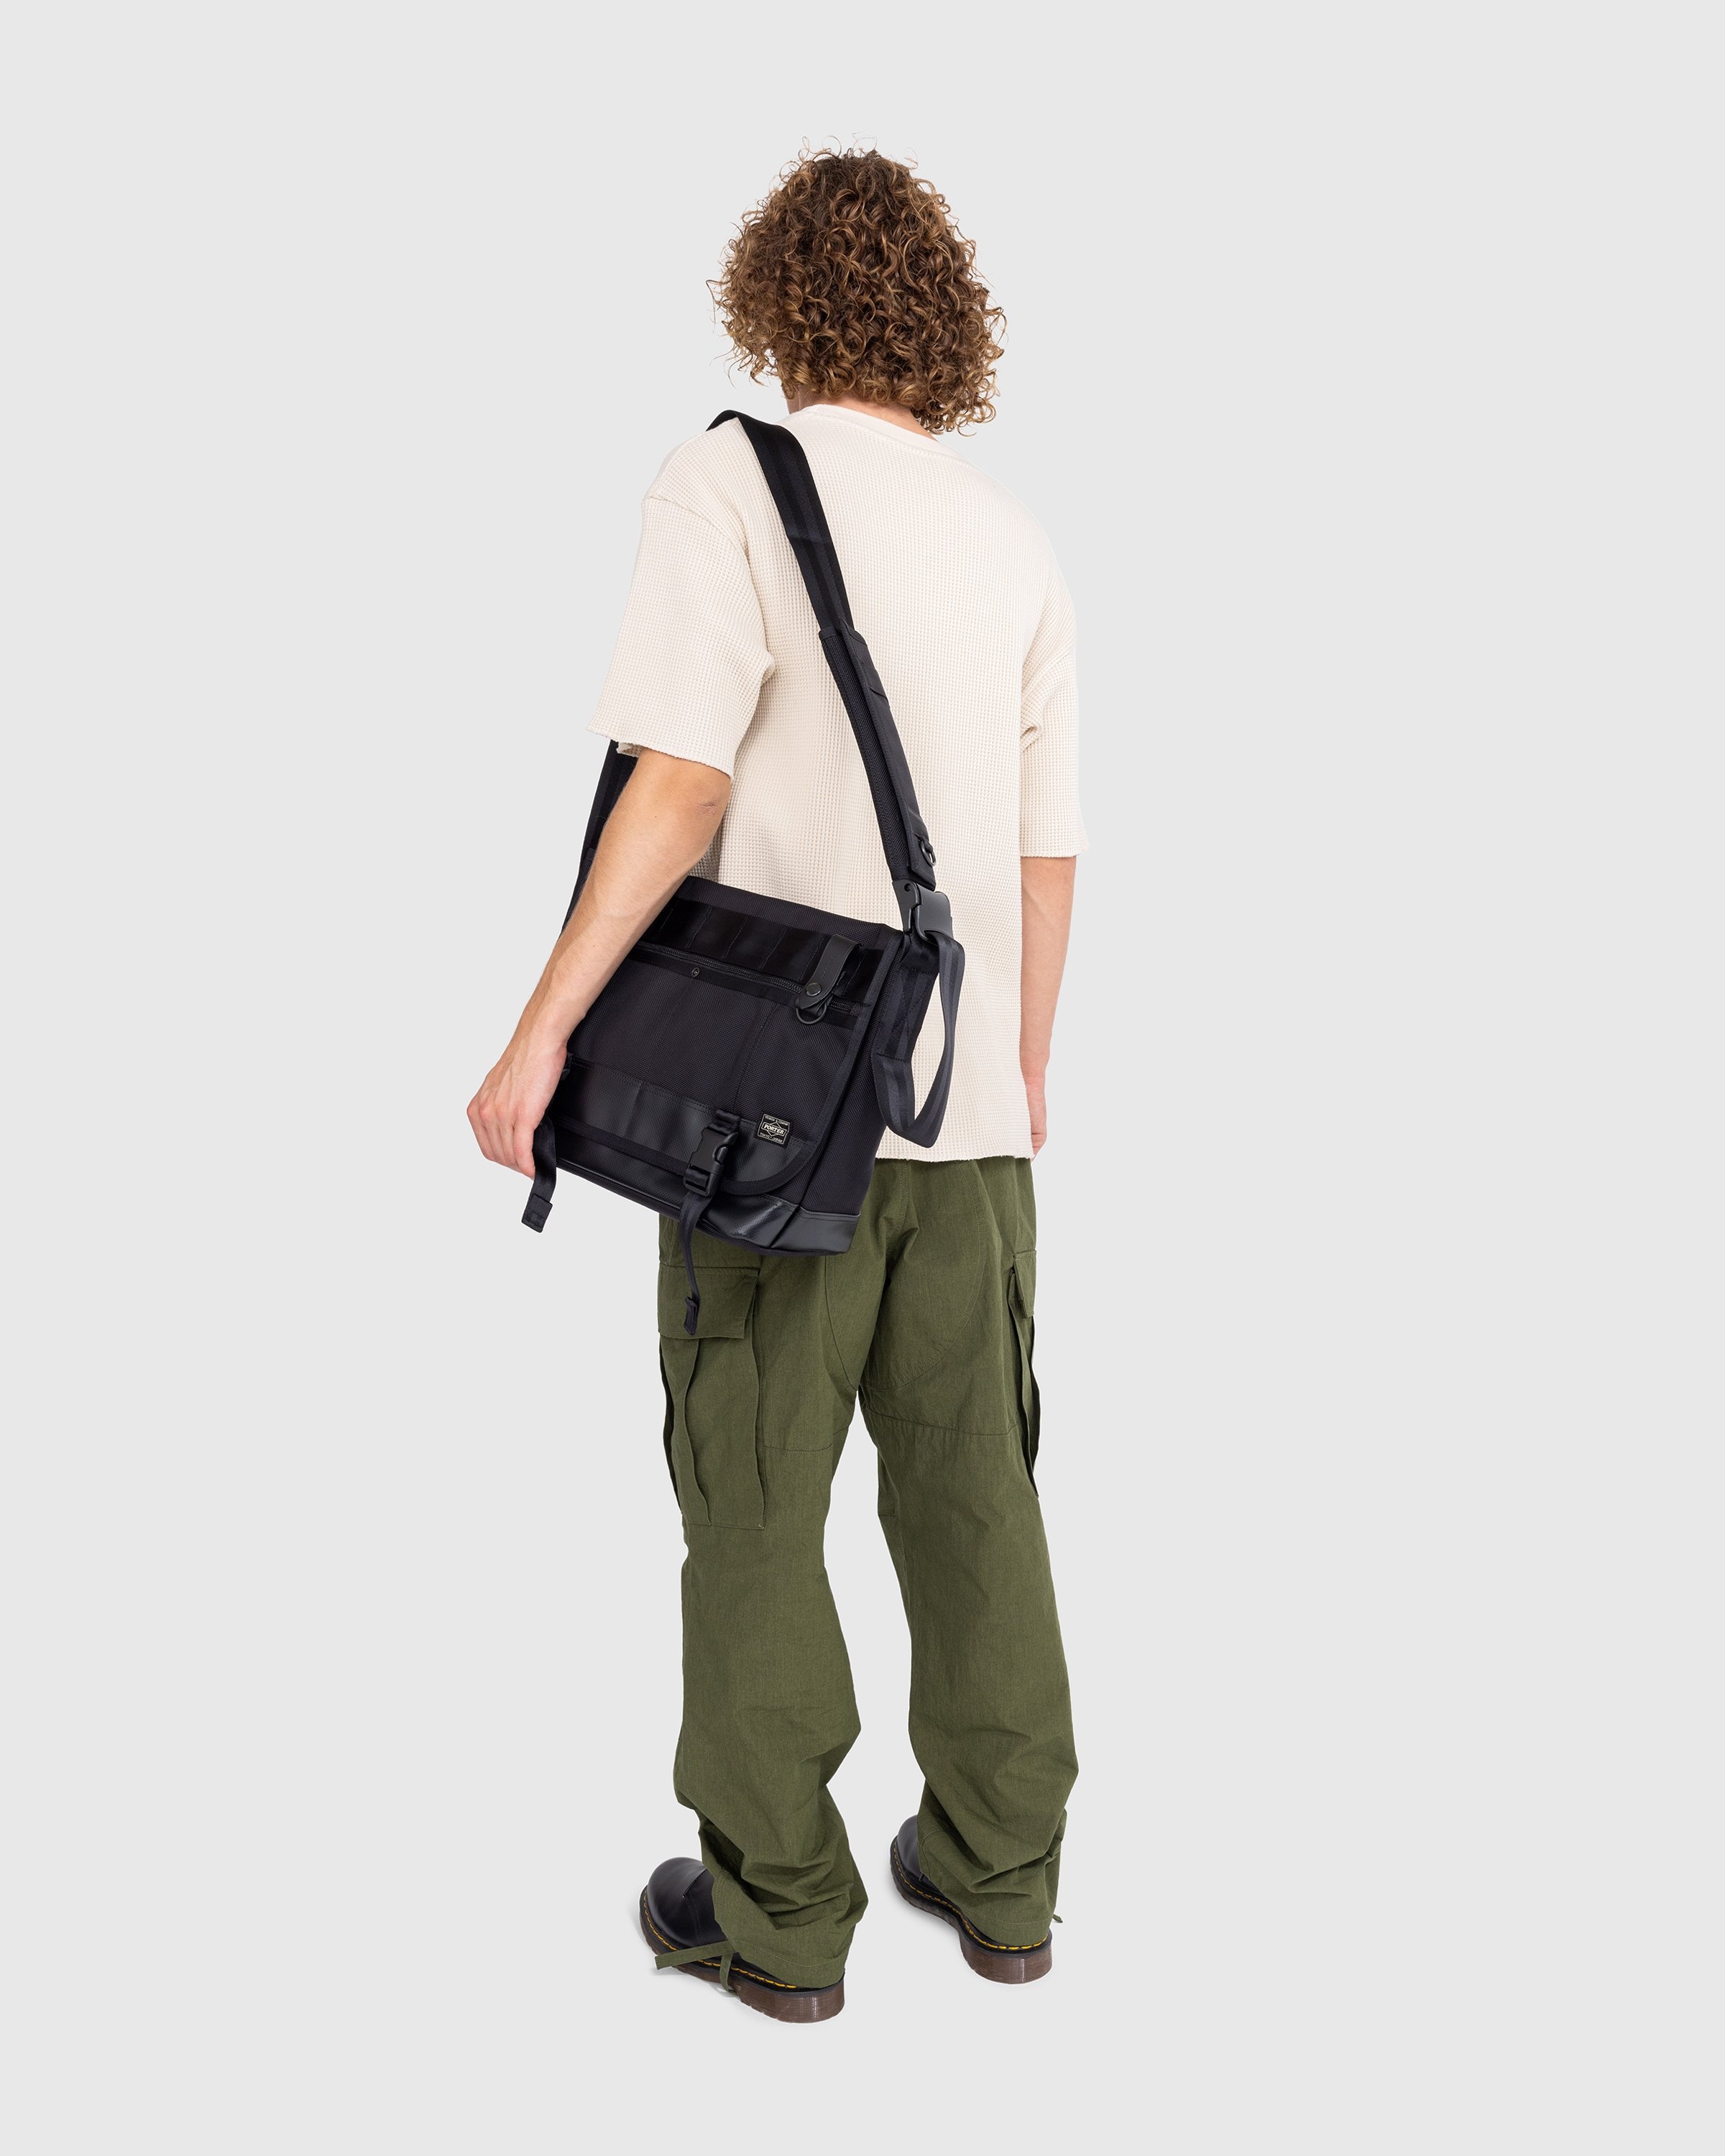 Porter-Yoshida & Co. – Heat Messenger Bag Black - One Size